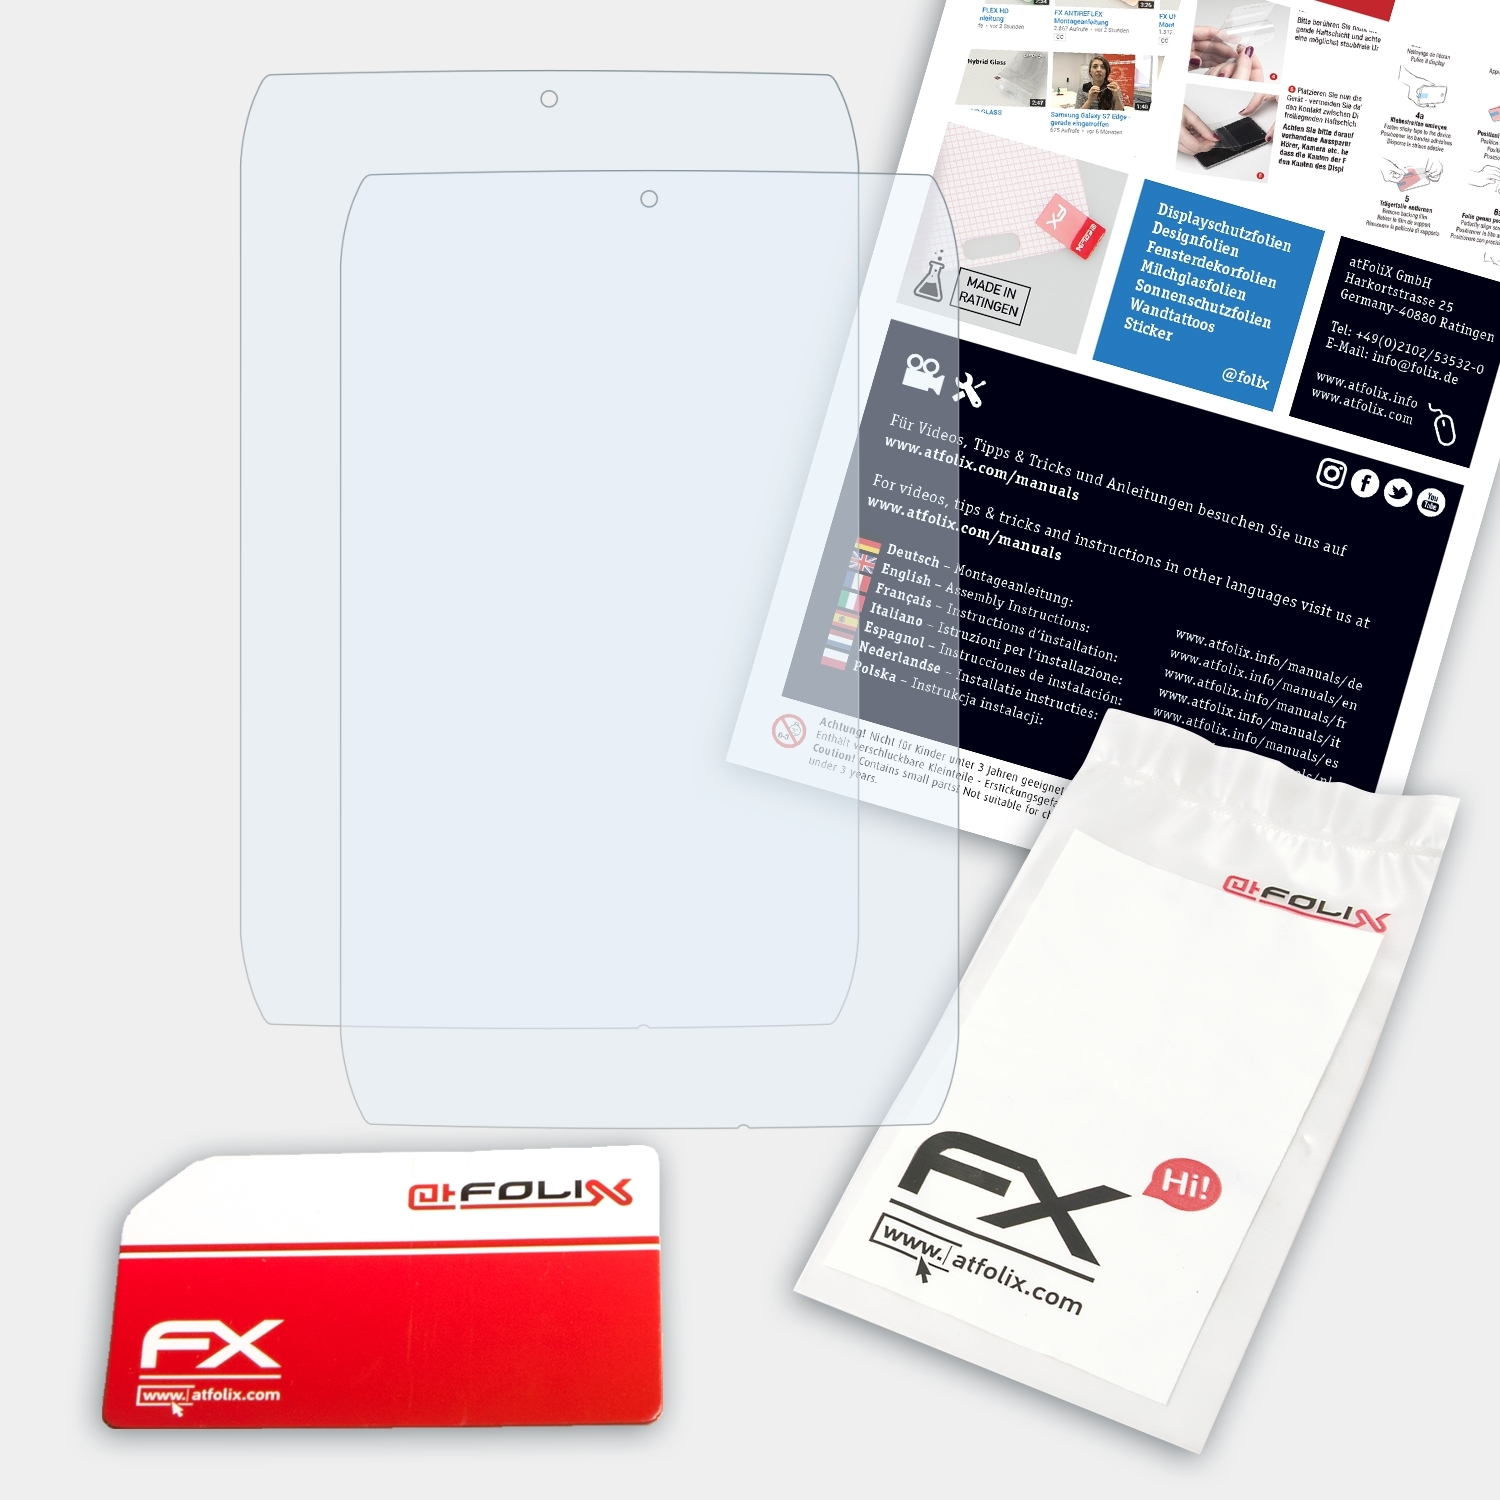 ATFOLIX 2x FX-Clear Edition) 2 Media Motorola Displayschutz(für XOOM